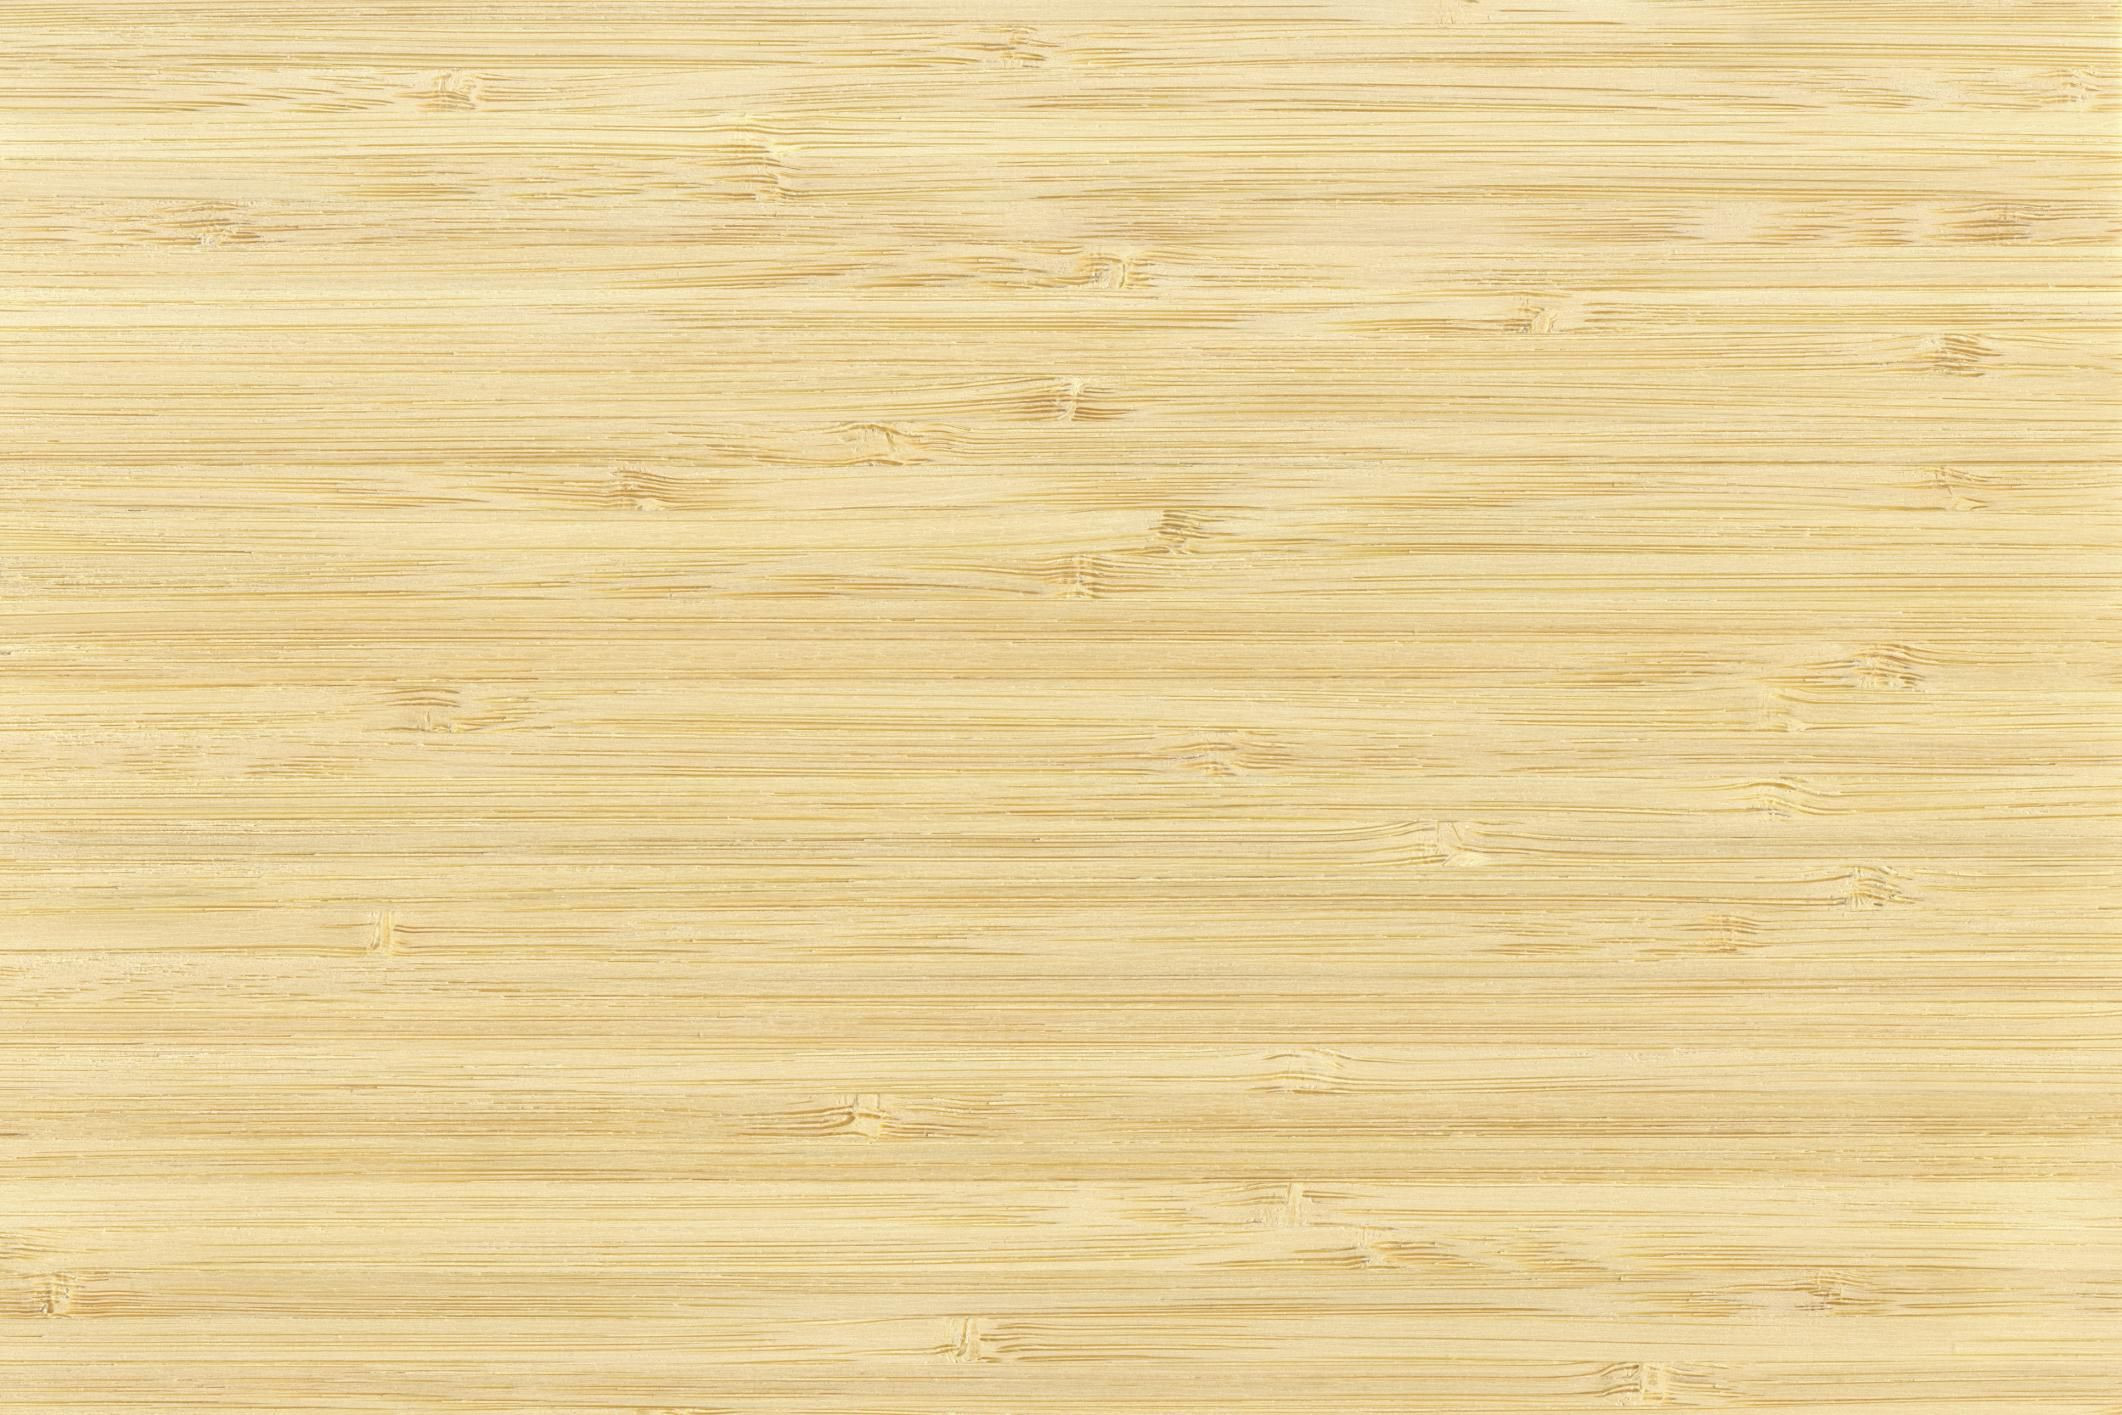 23 Fabulous Hardwood Floor Refinishing Niagara Region 2024 free download hardwood floor refinishing niagara region of bamboo flooring in a bathroom things to consider within 182740579 56a2fd883df78cf7727b6d14